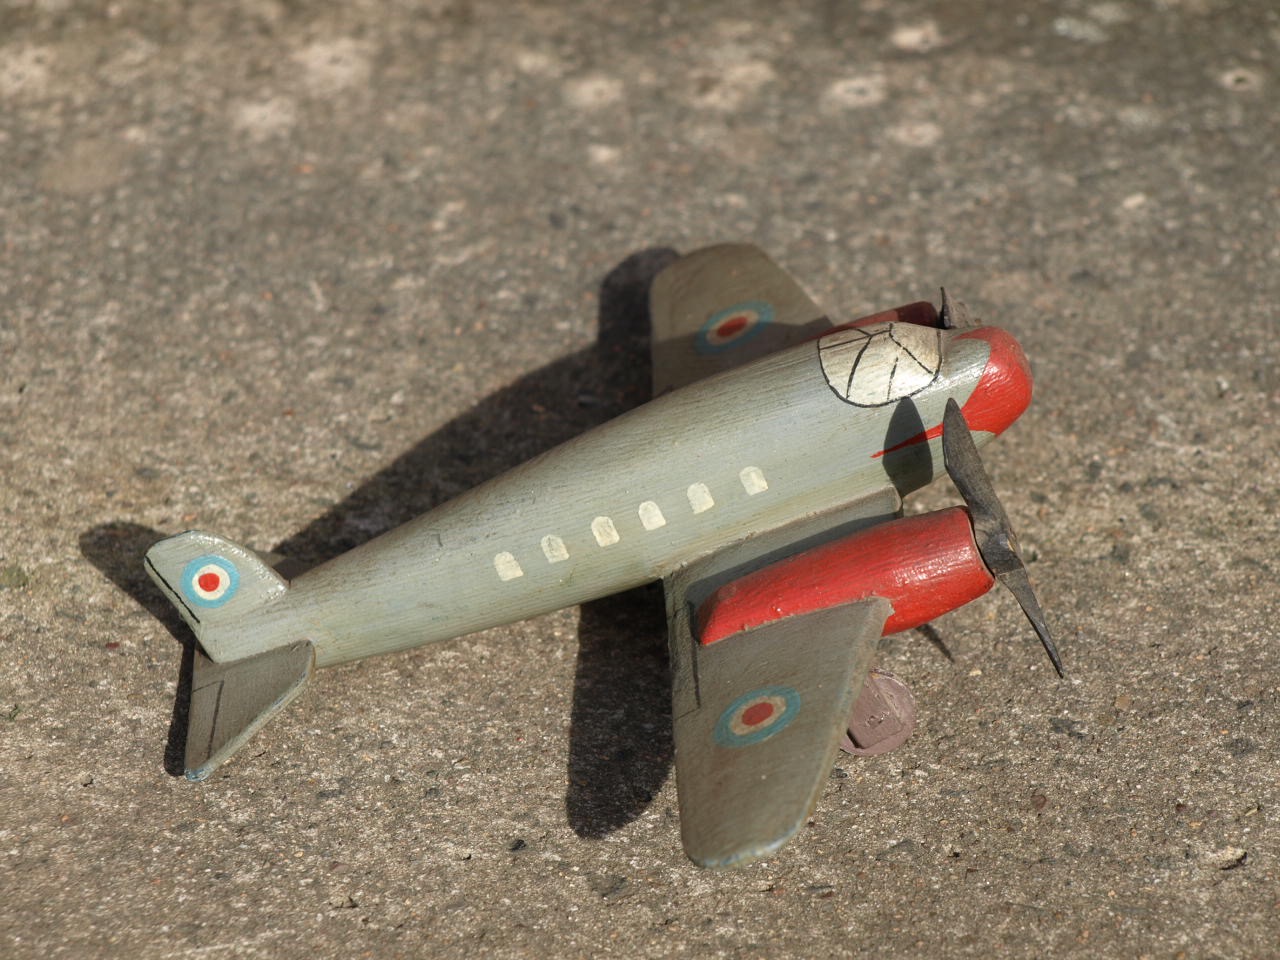 Model plane made by PoW, Amisfield.jpg